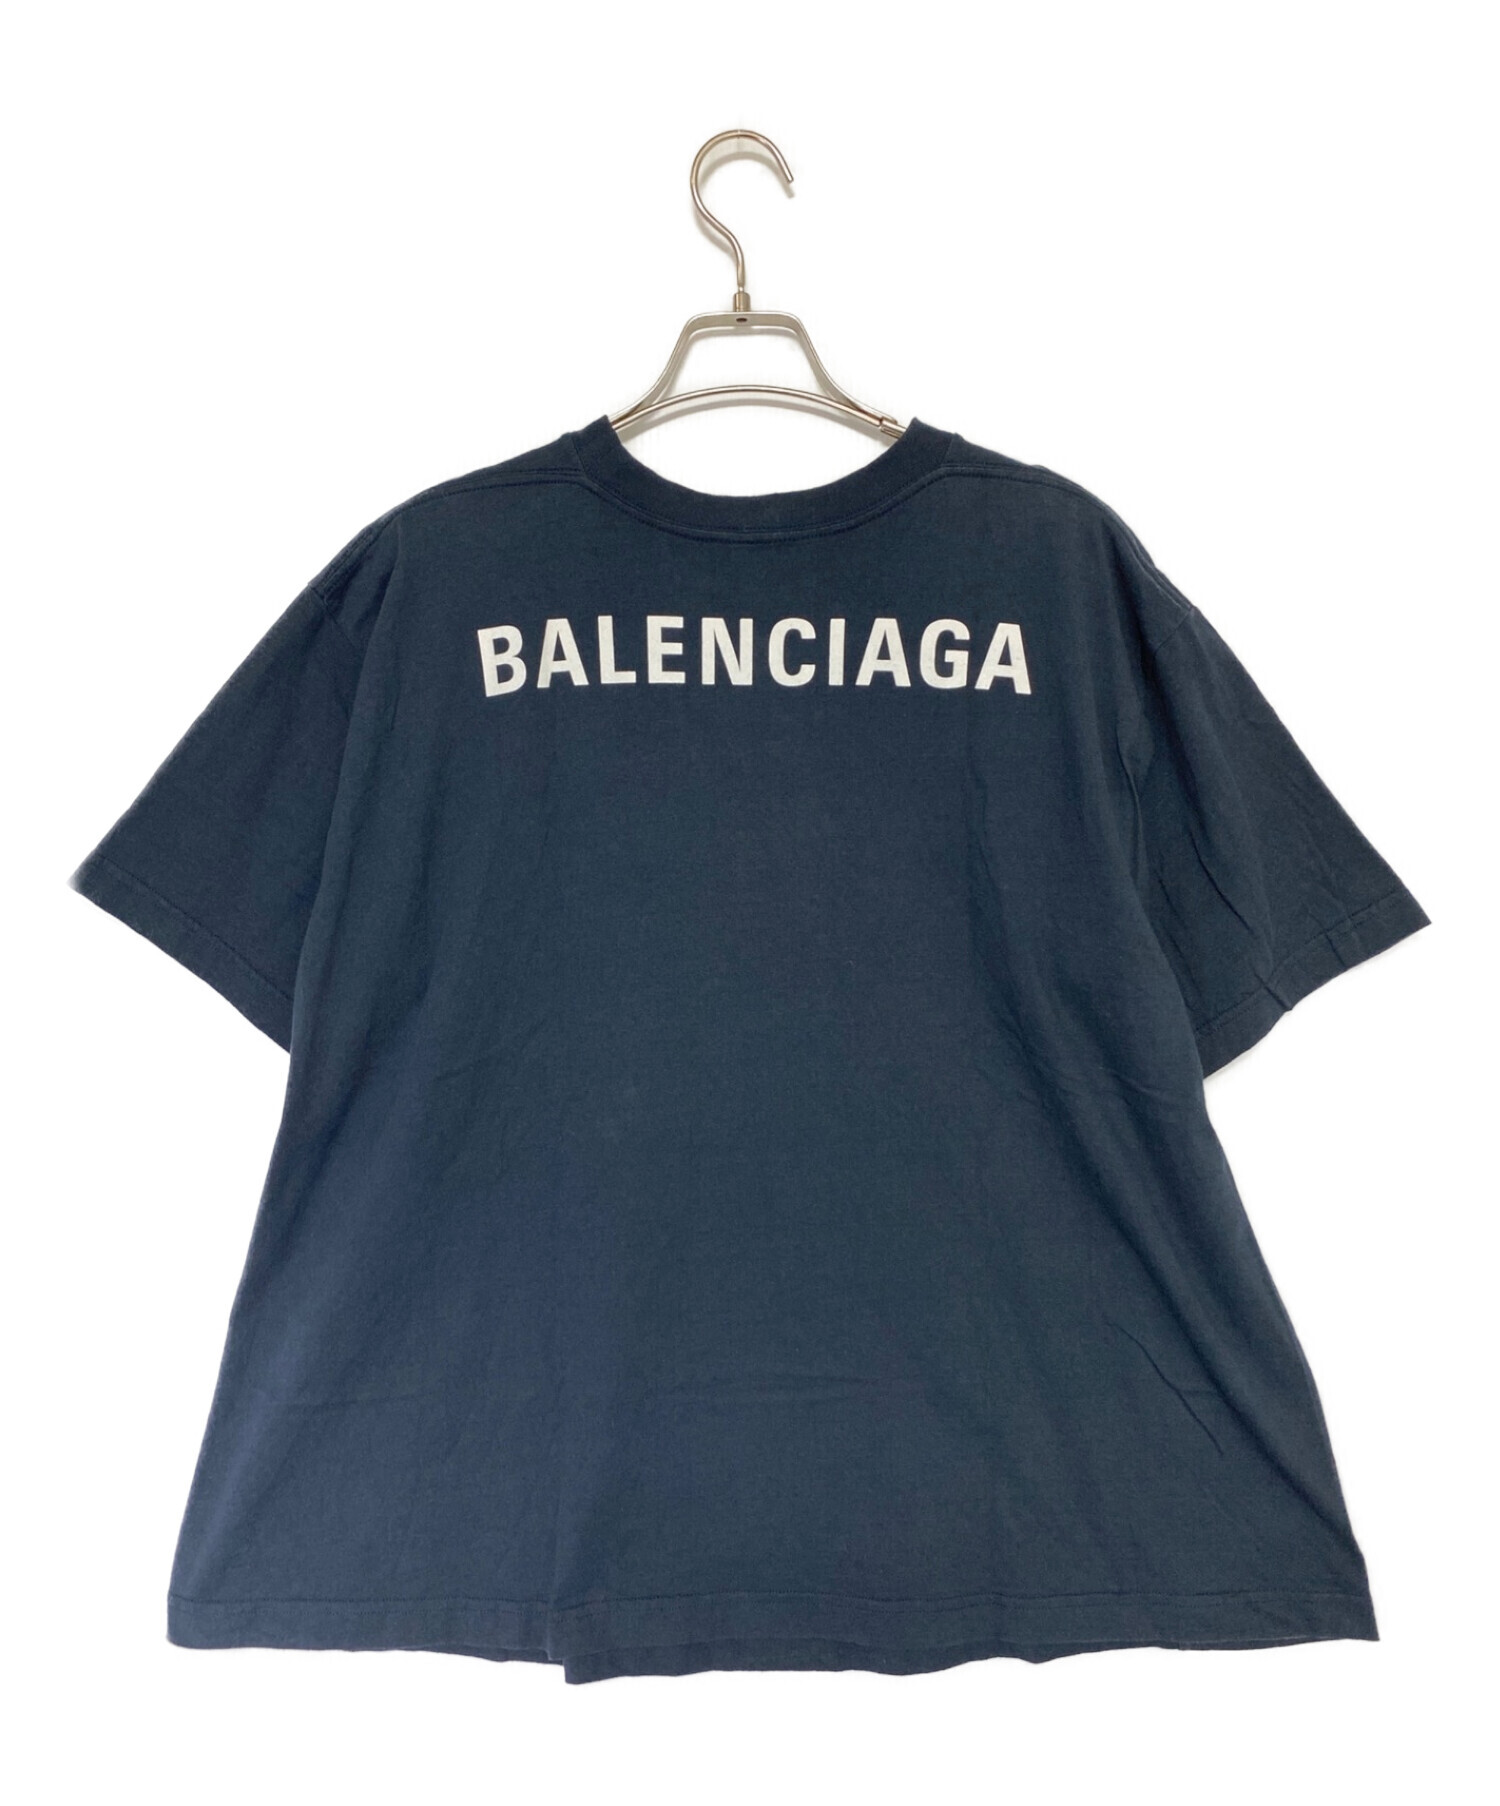 BALENCIAGA (バレンシアガ) バックロゴTシャツ ネイビー サイズ:S